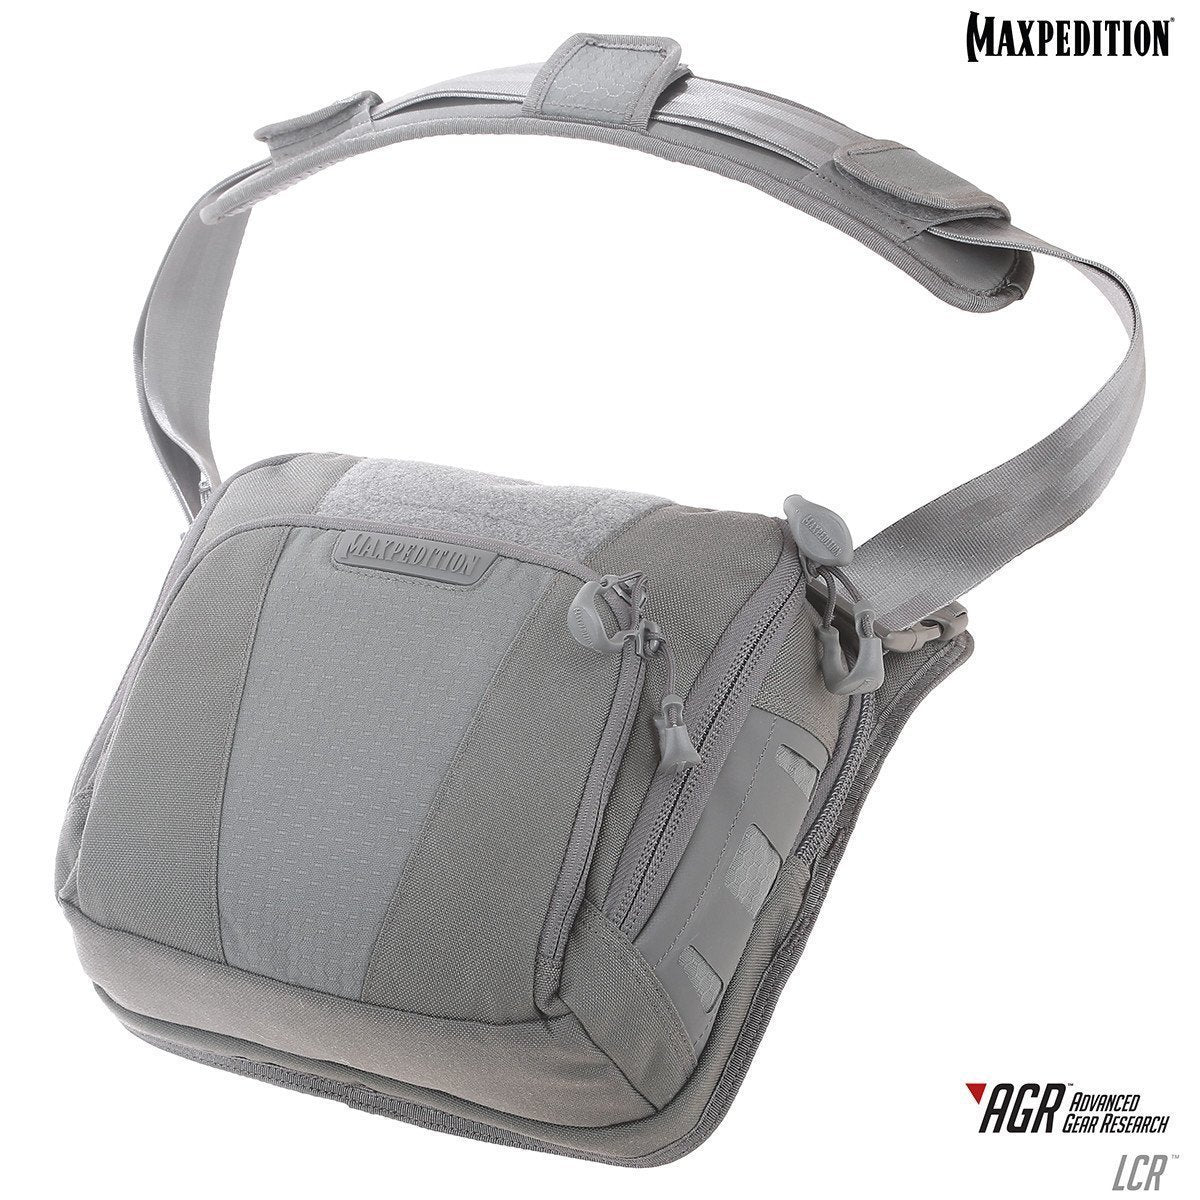 Lochspyr™ Crossbody Shoulder Bag | Maxpedition Tactical Gear